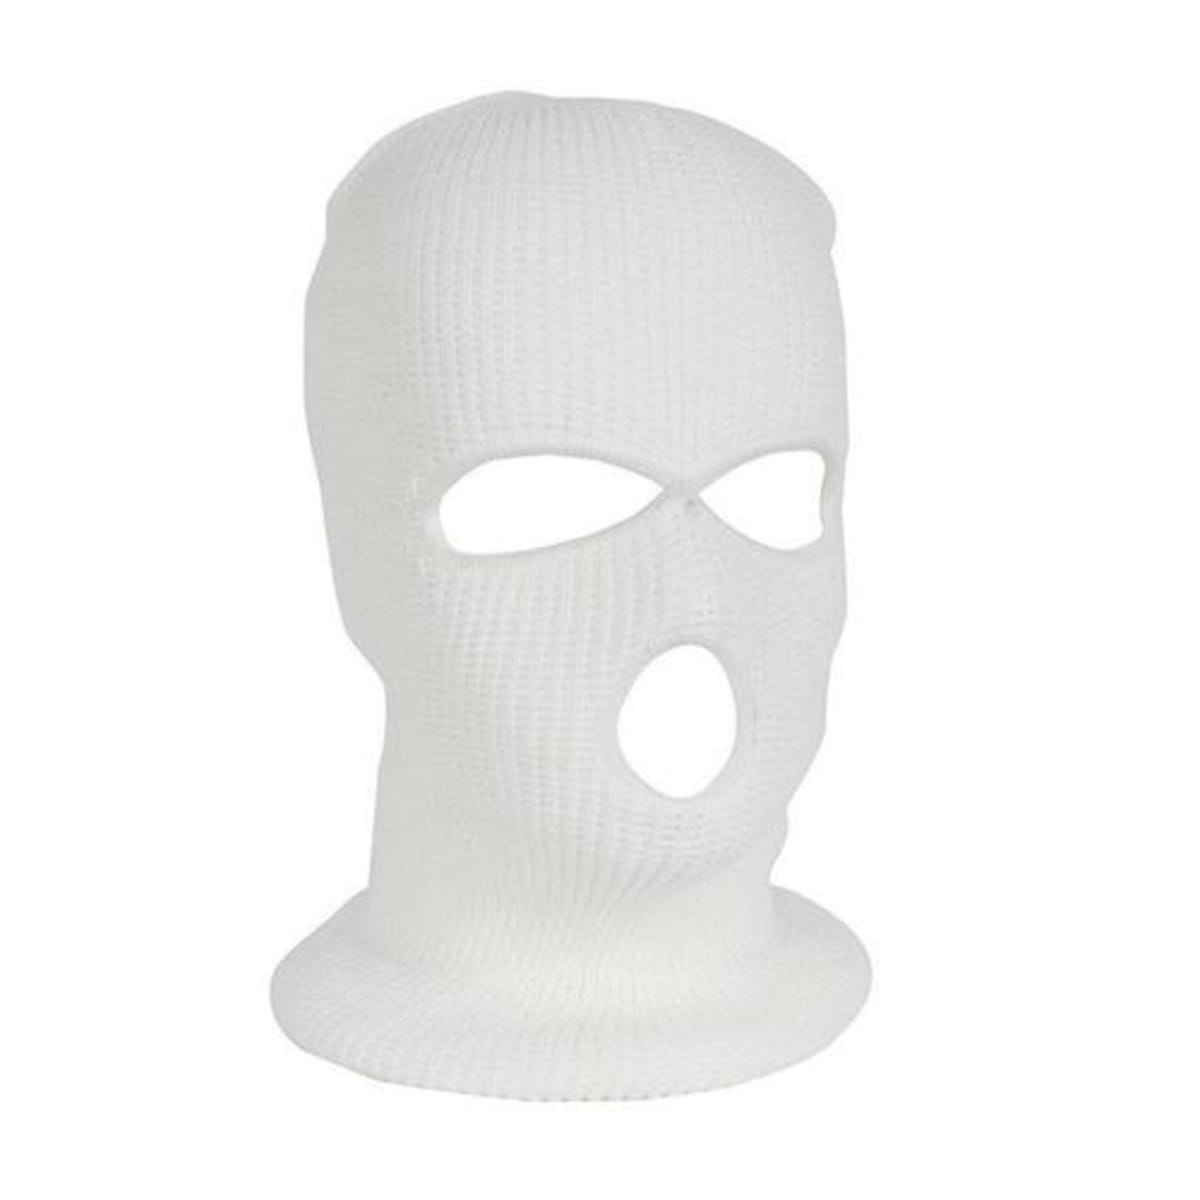 3-hole Ski Mask, Affordable & Durable